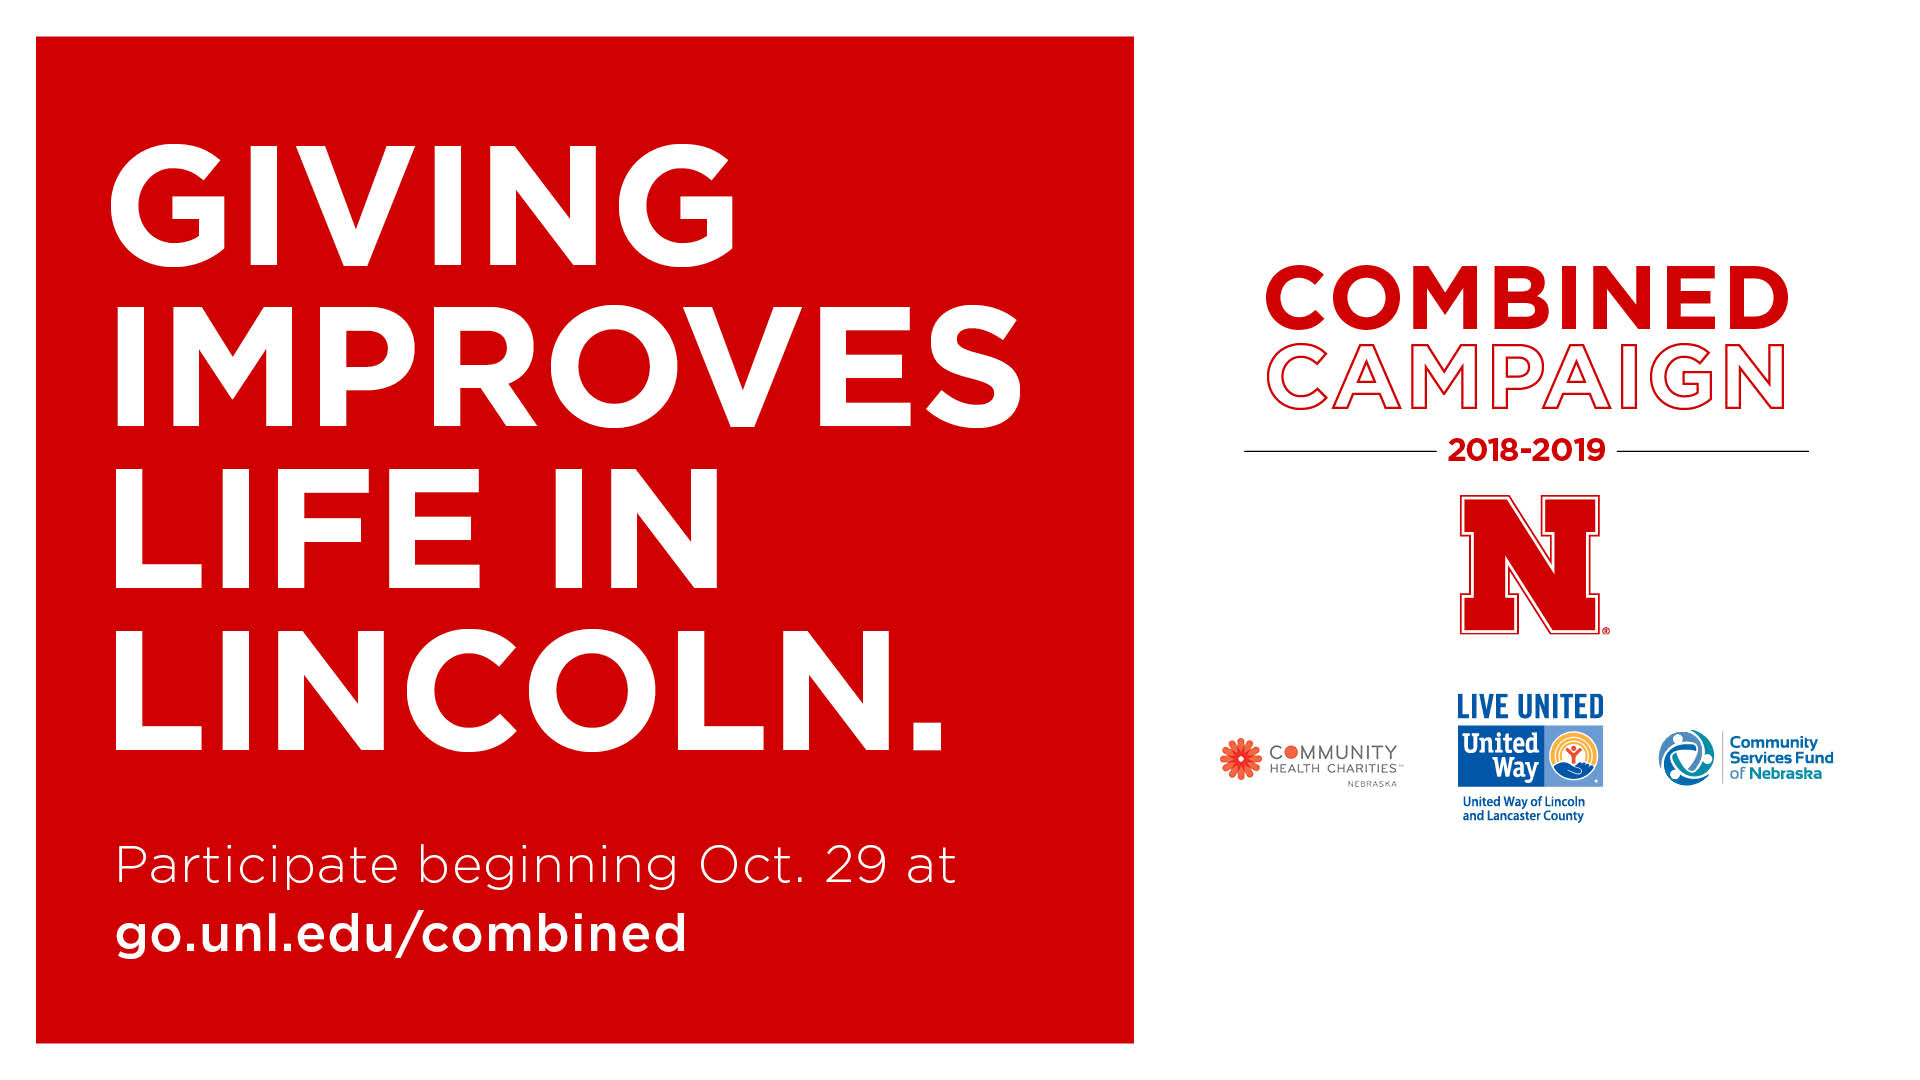 The annual Combined Campaign runs through Nov. 30.